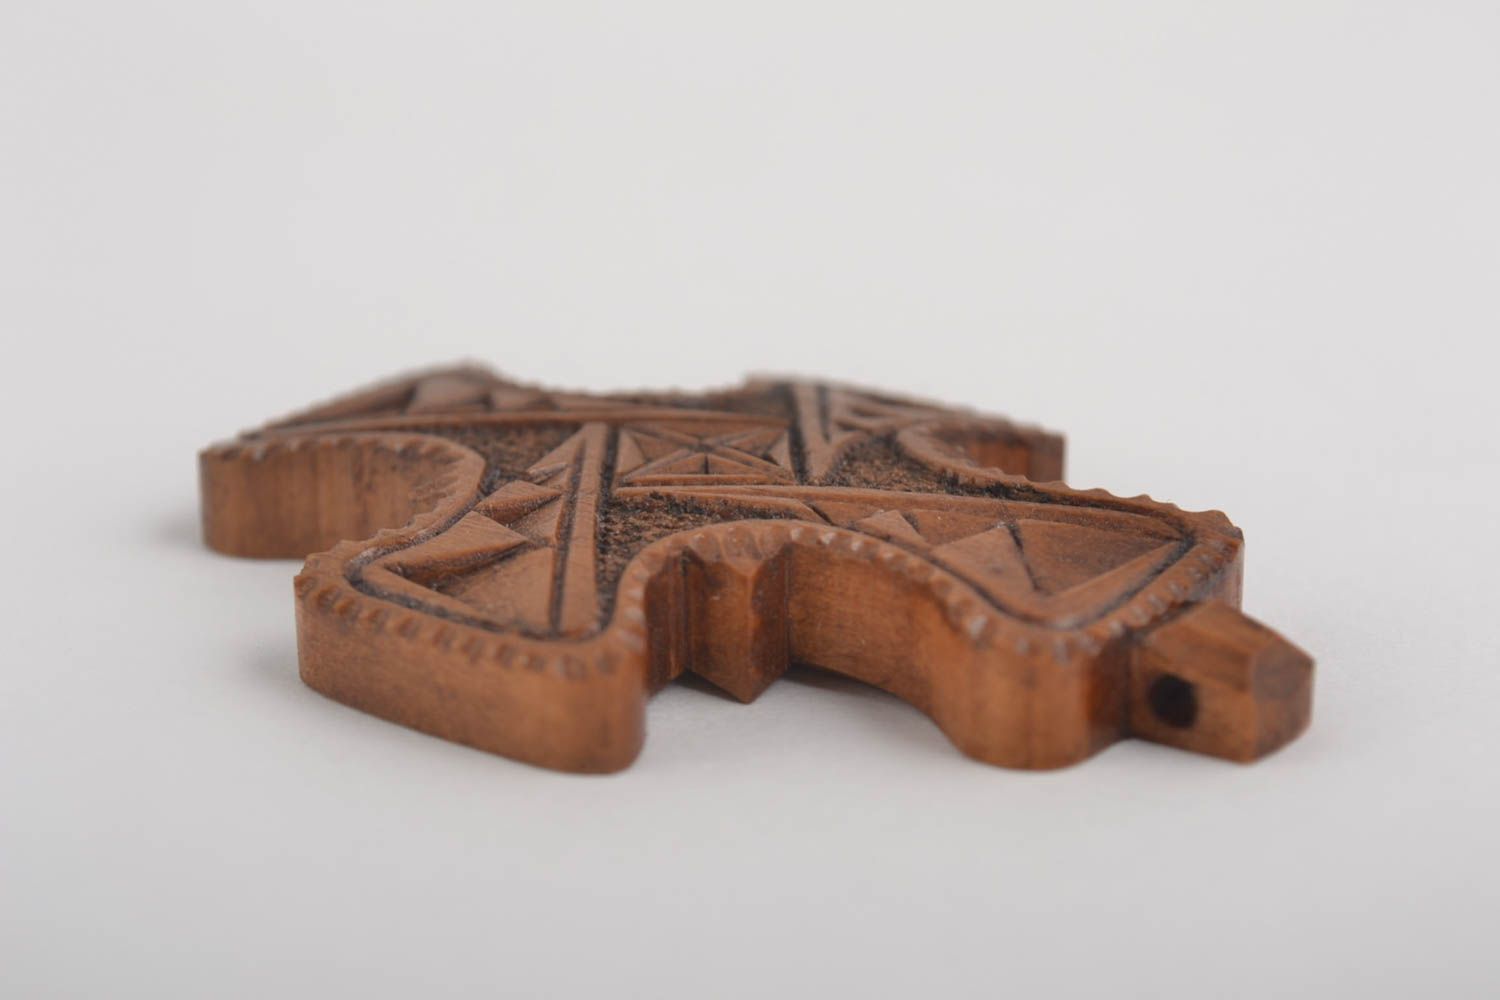 Crucifix necklace handmade jewelry wooden cross pendant designer accessories photo 3